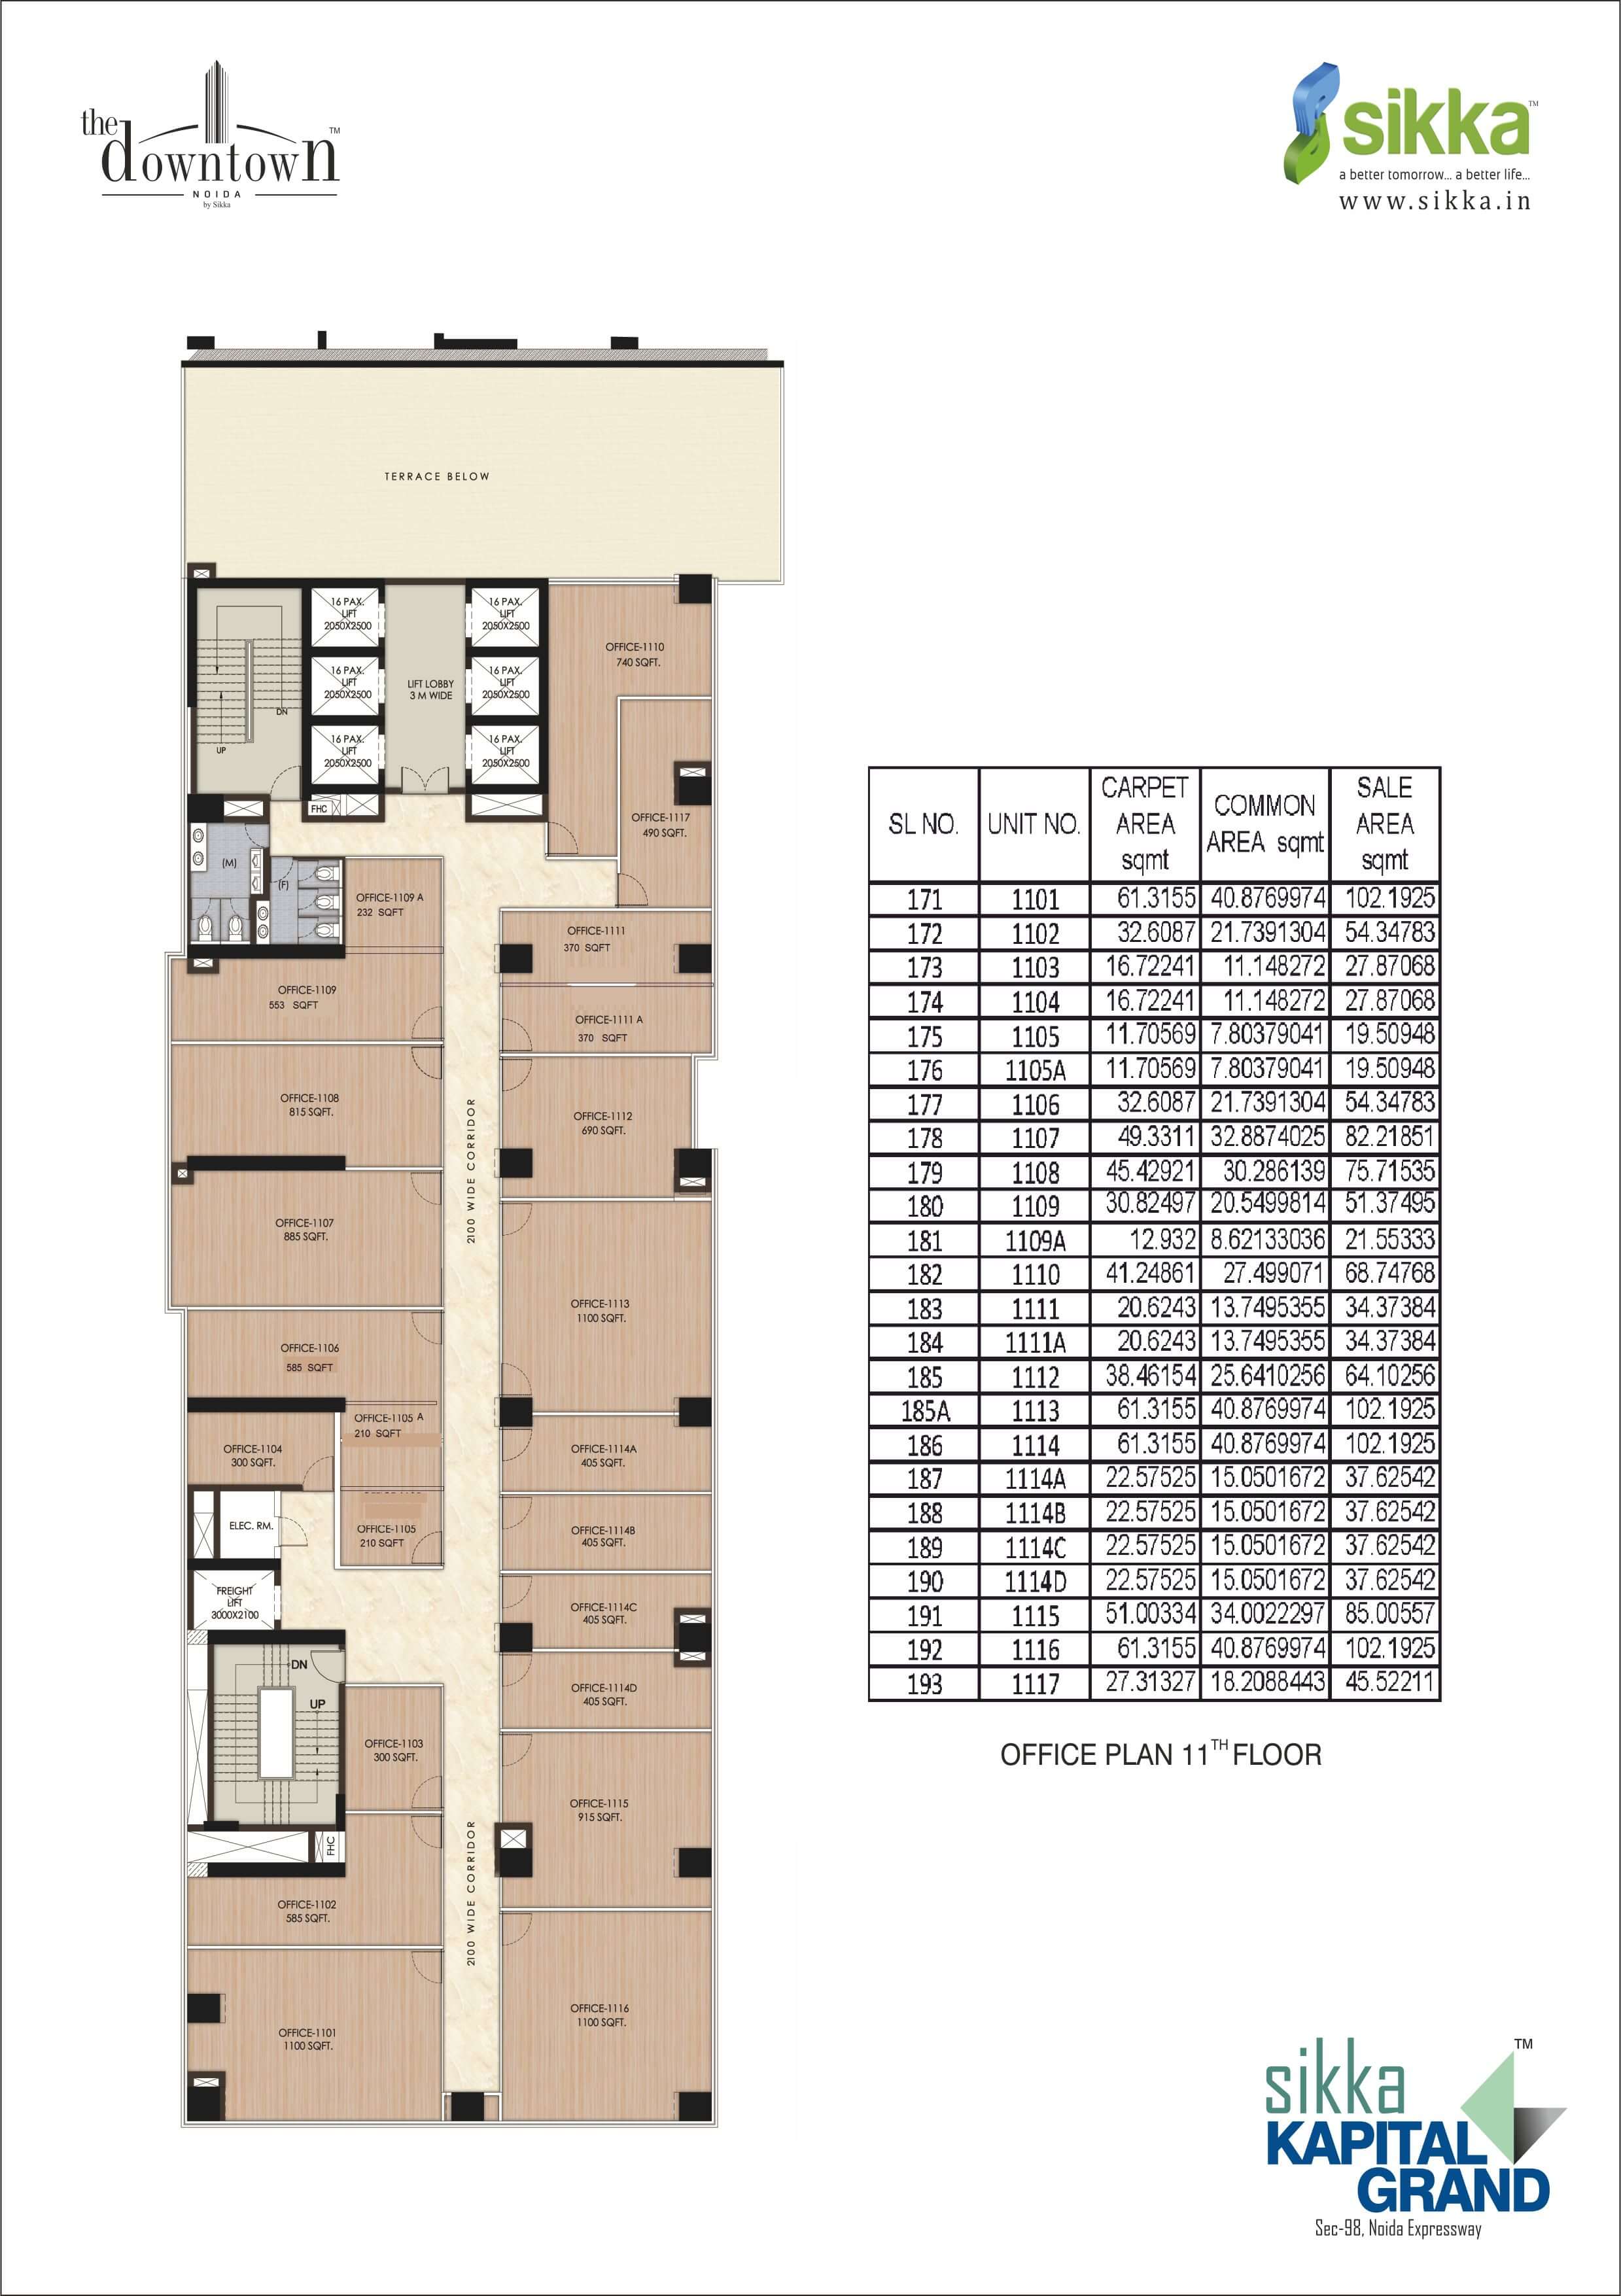 Kapital Grand - Office Plan 11th Floor